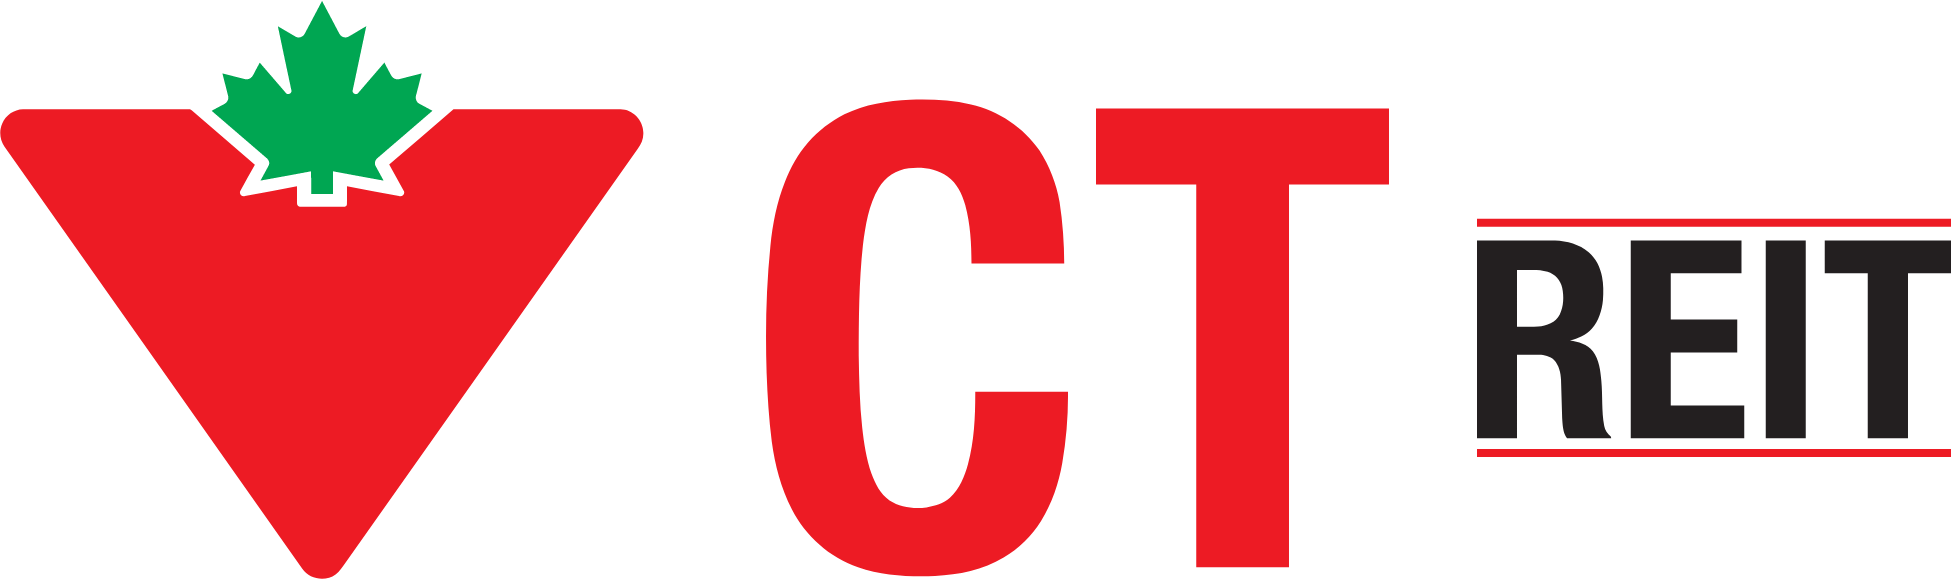 CT REIT logo large (transparent PNG)